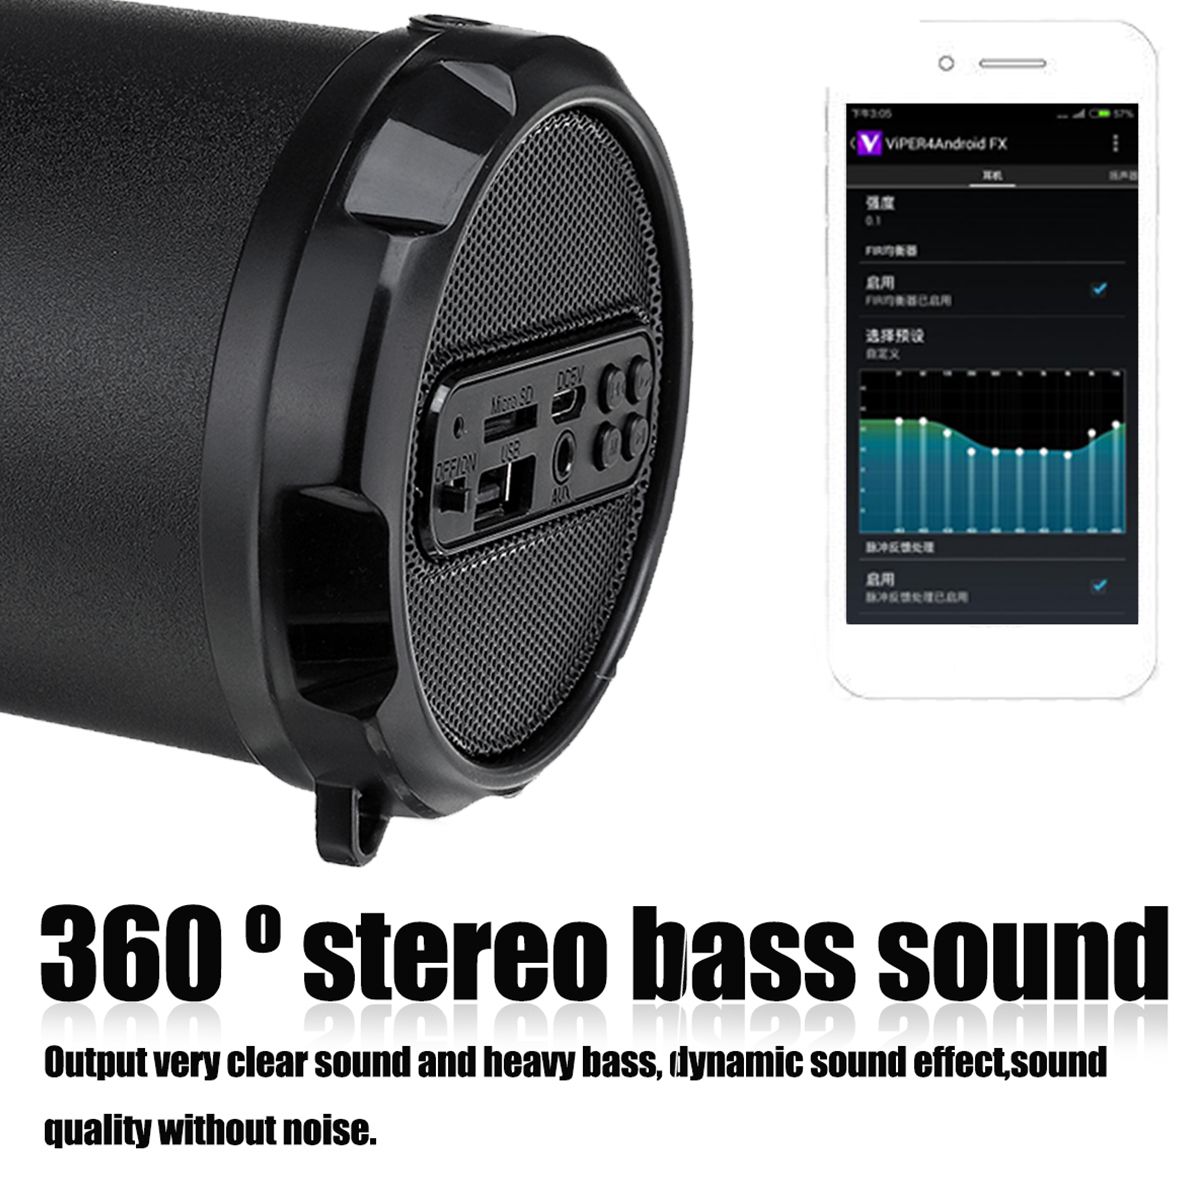 Beecaro-S41B-Portable-Outdoor-bluetooth-Stereo-Bass-Speaker-with-1200mAh-Battery-Support-FM-Radio-Mi-1631217